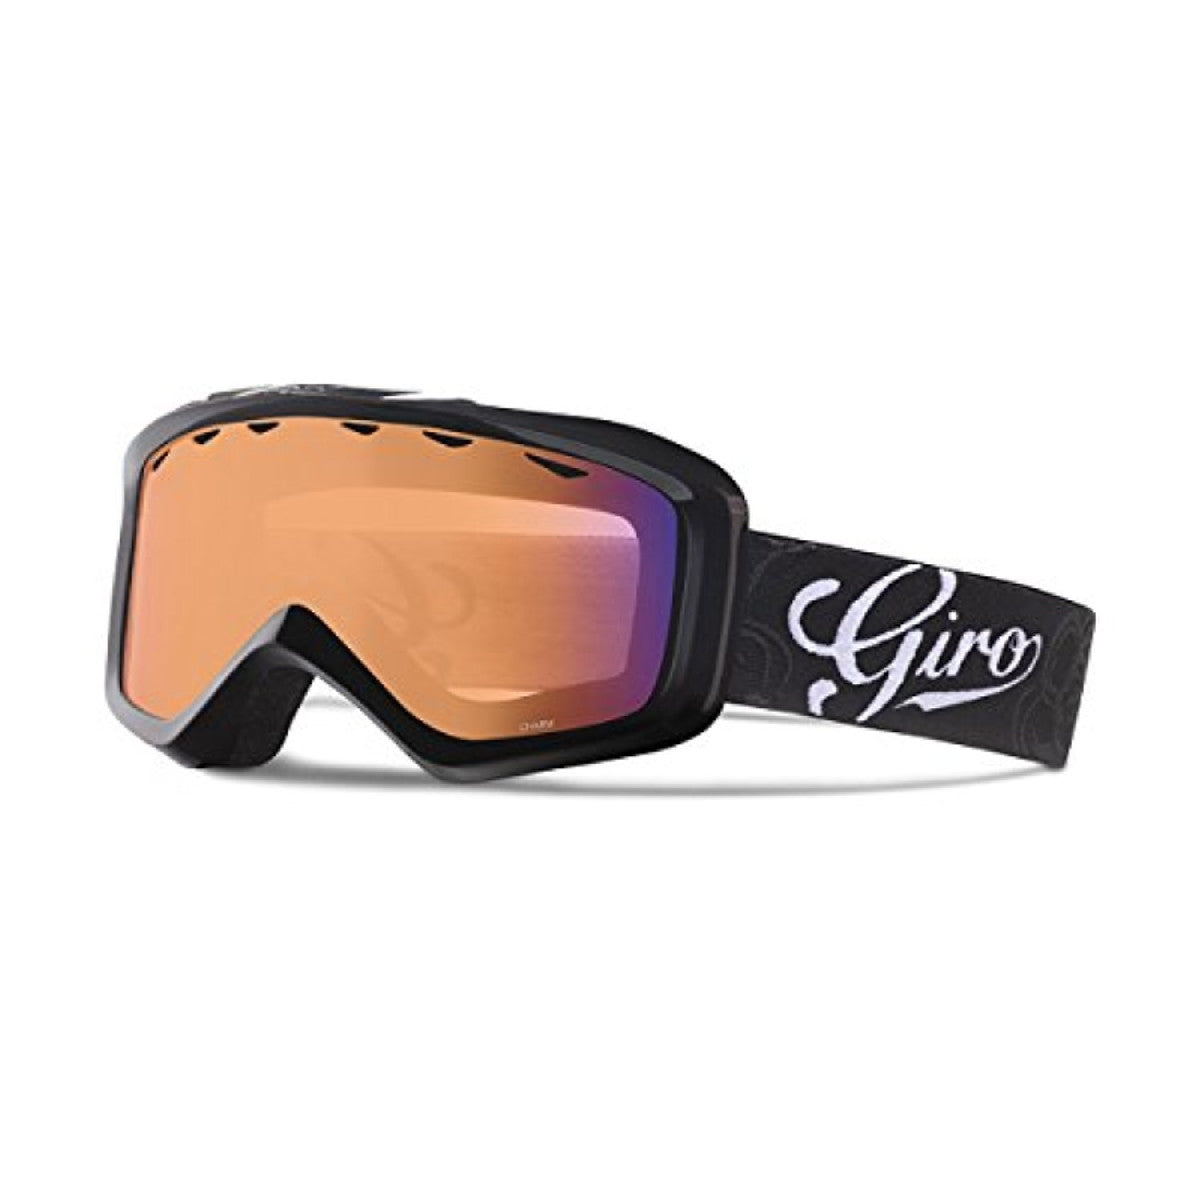 Giro Women's Charm Snow Goggle Black Sketch Floral Persimmon Boost - Giro Snow Snow Goggles